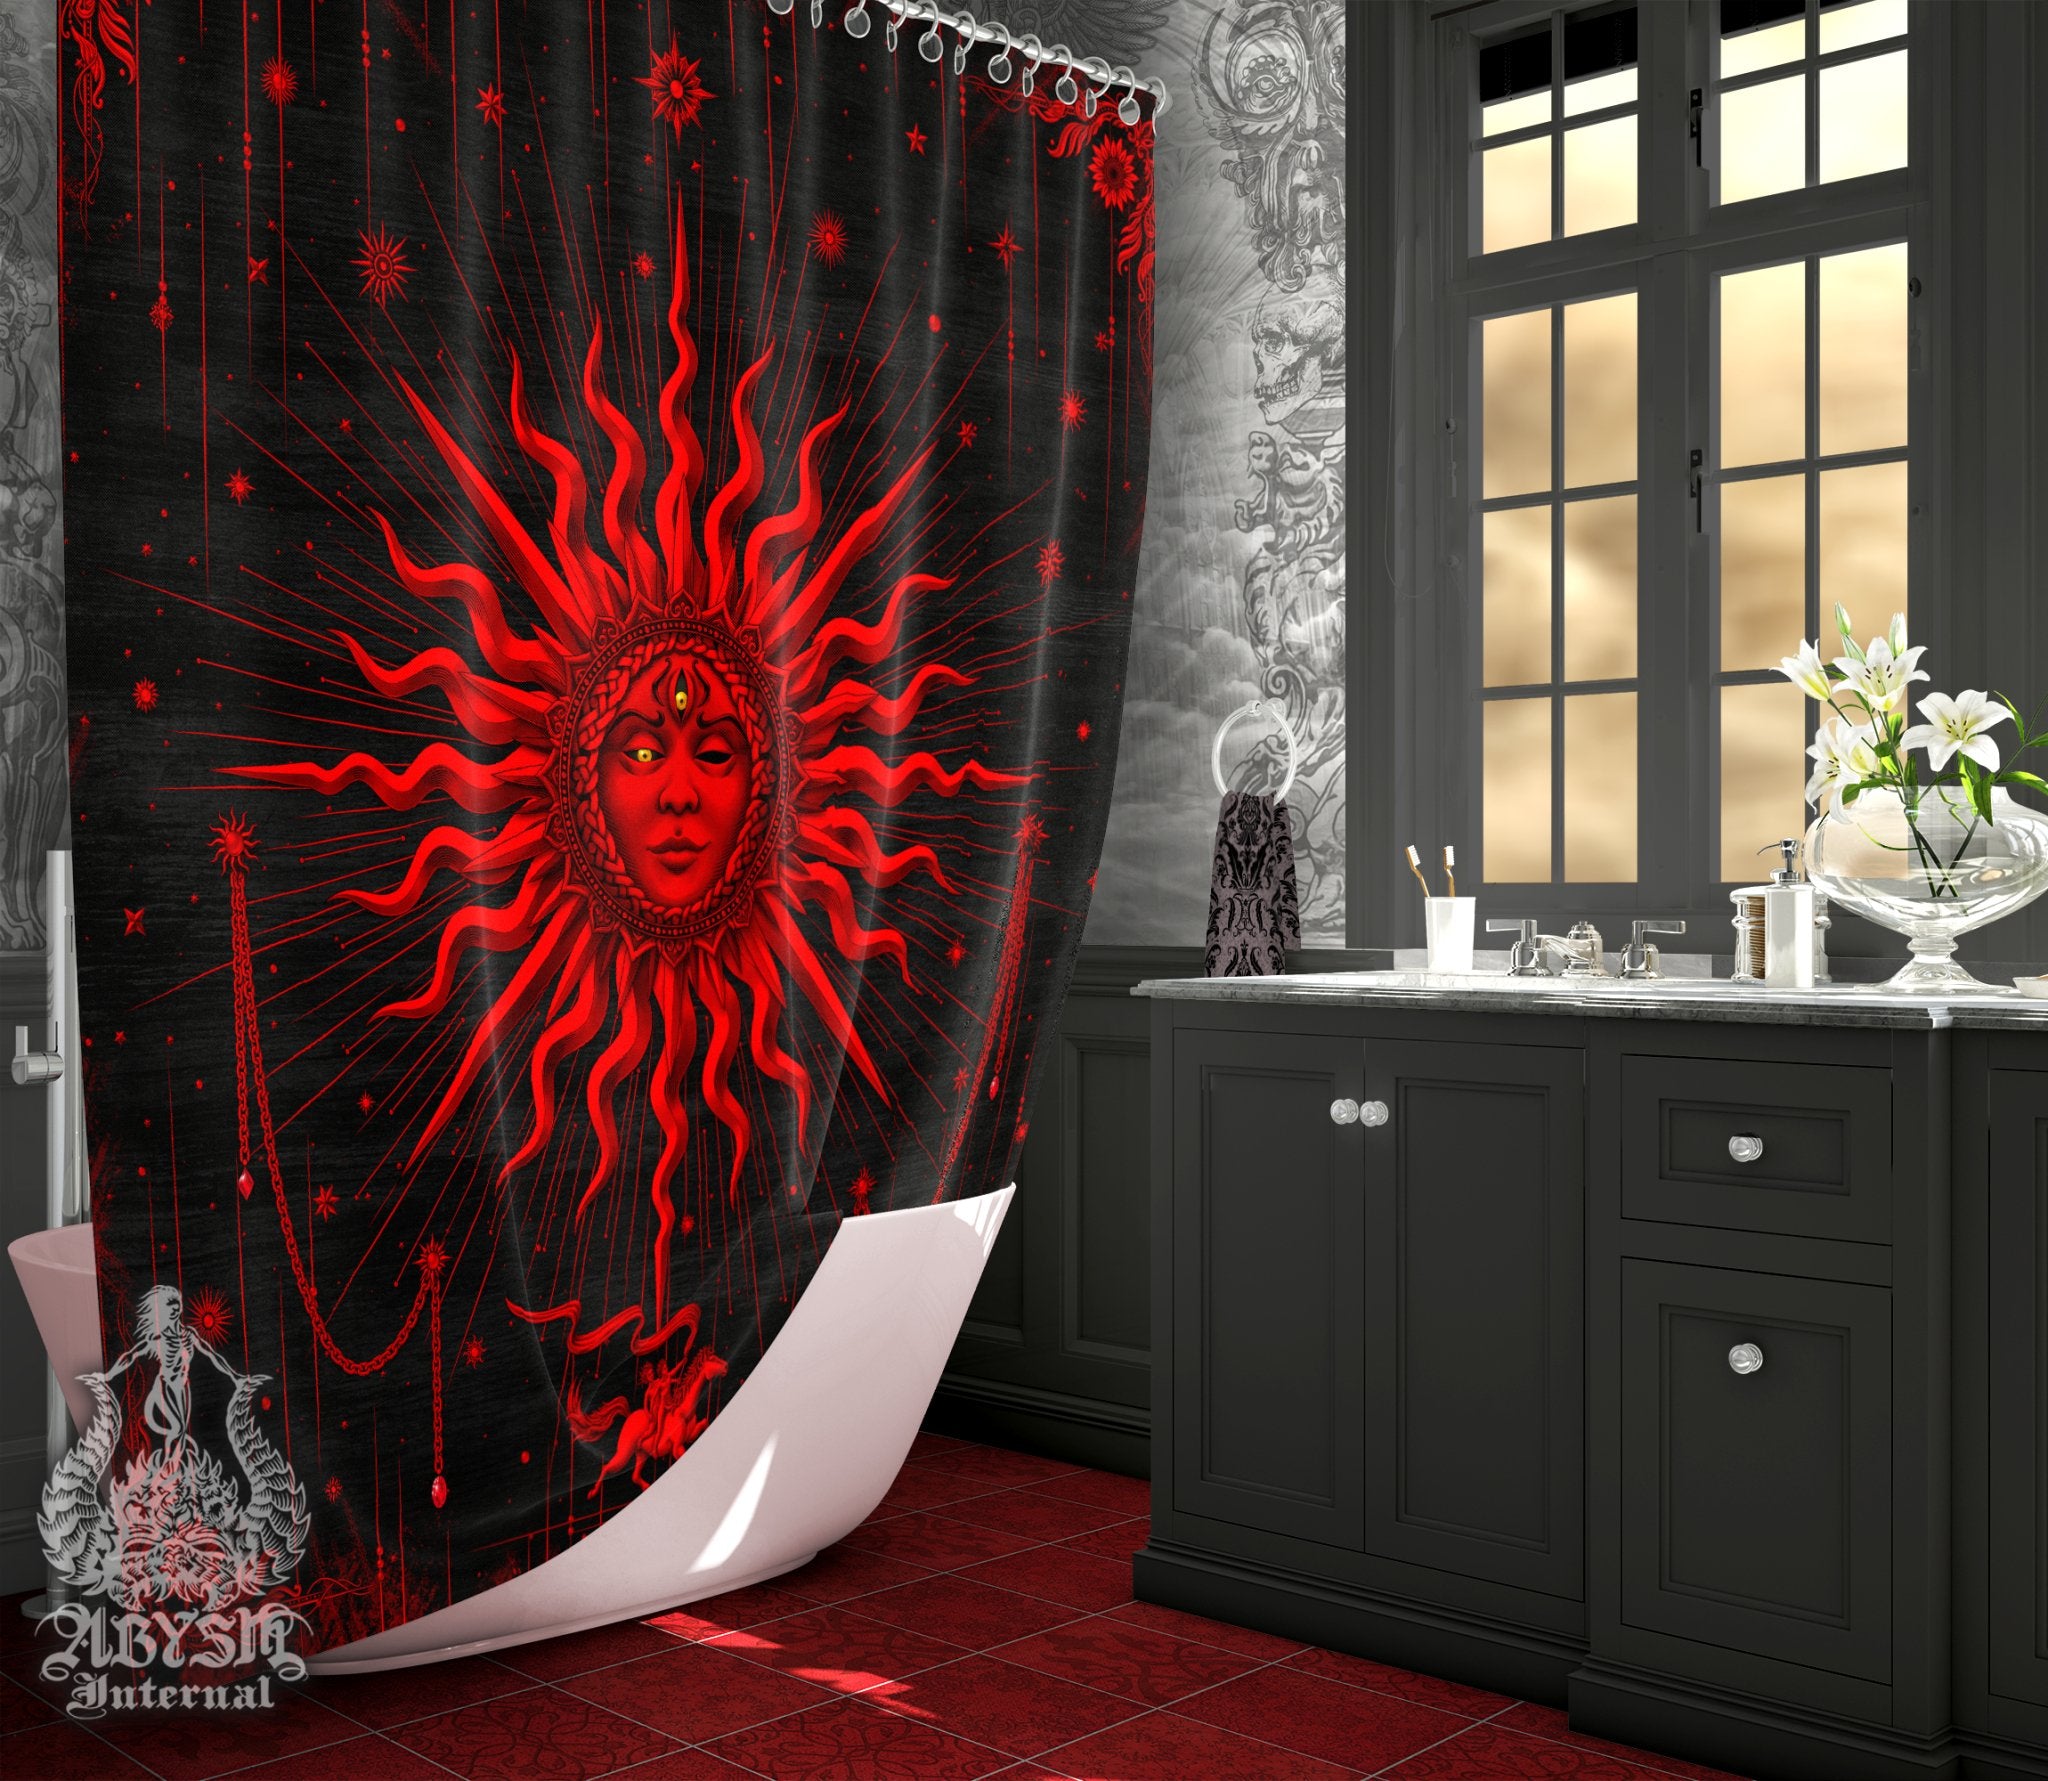 Gothic Sun Shower Curtain, 71x74 inches, Goth Bathroom Decor, Tarot Arcana, Esoteric Art Print, Alternative Home - Red Black - Abysm Internal